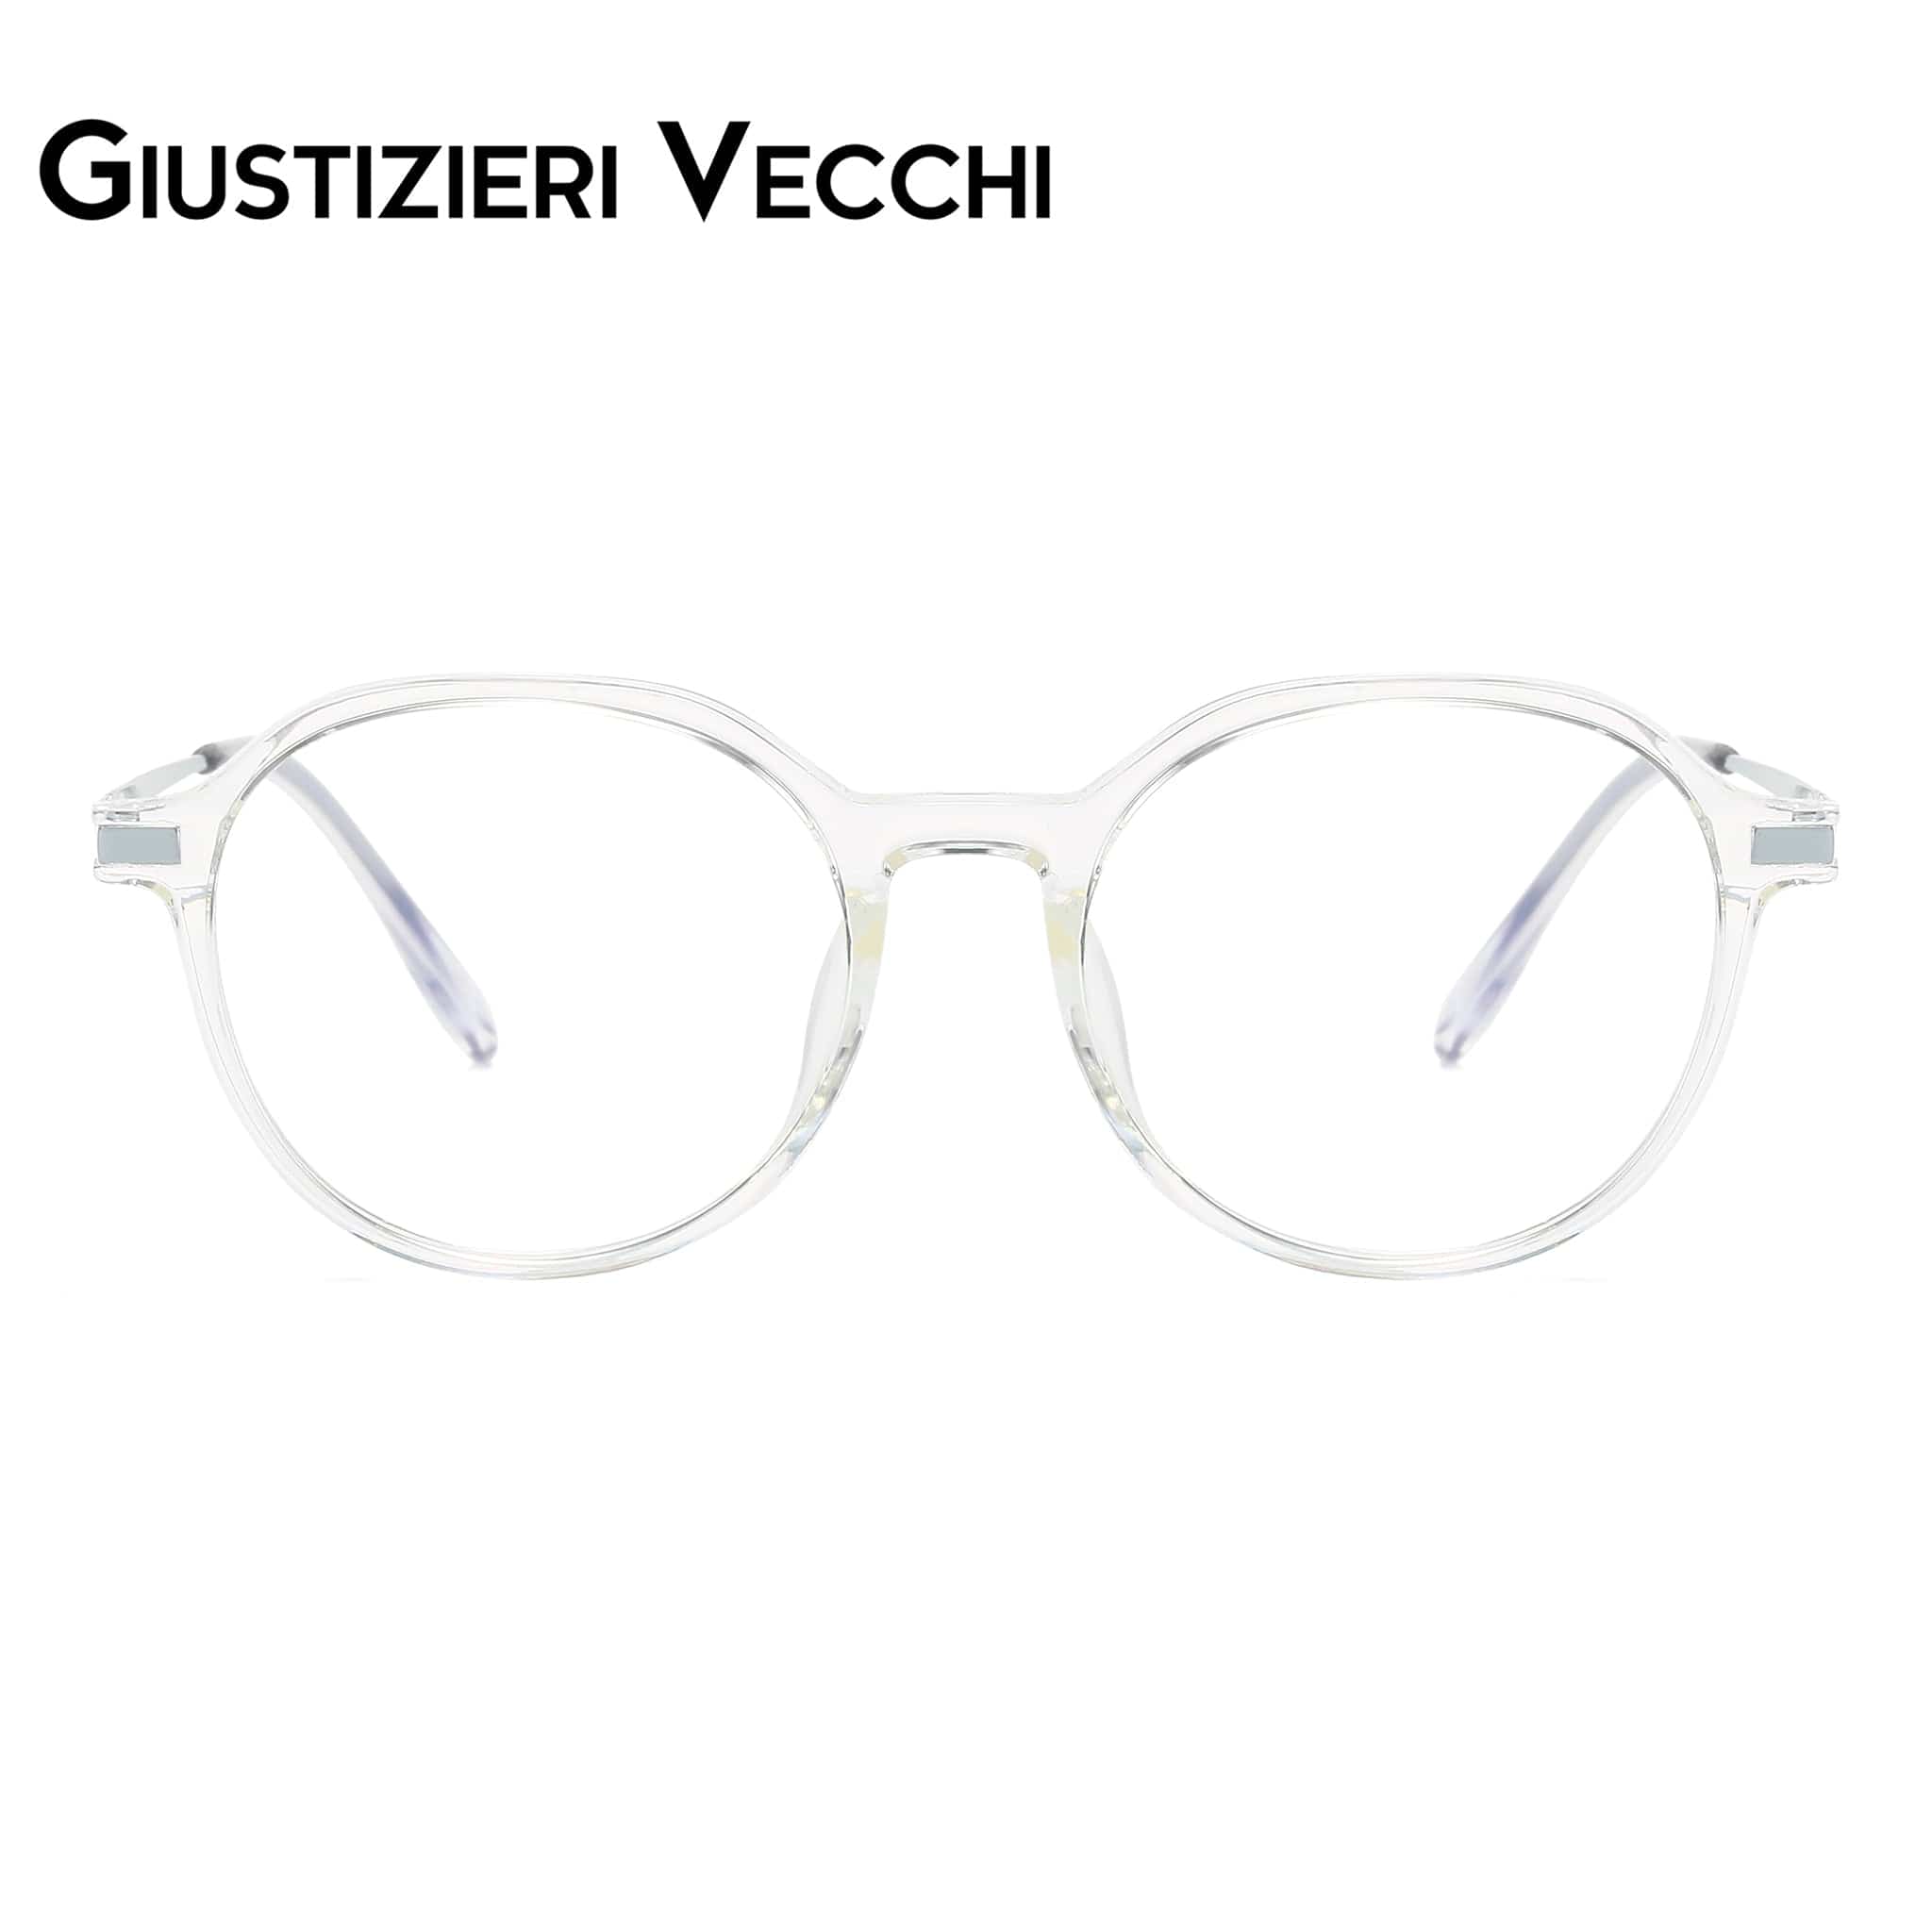 GIUSTIZIERI VECCHI Eyeglasses Small / Clear Crystal StarBurst Tre